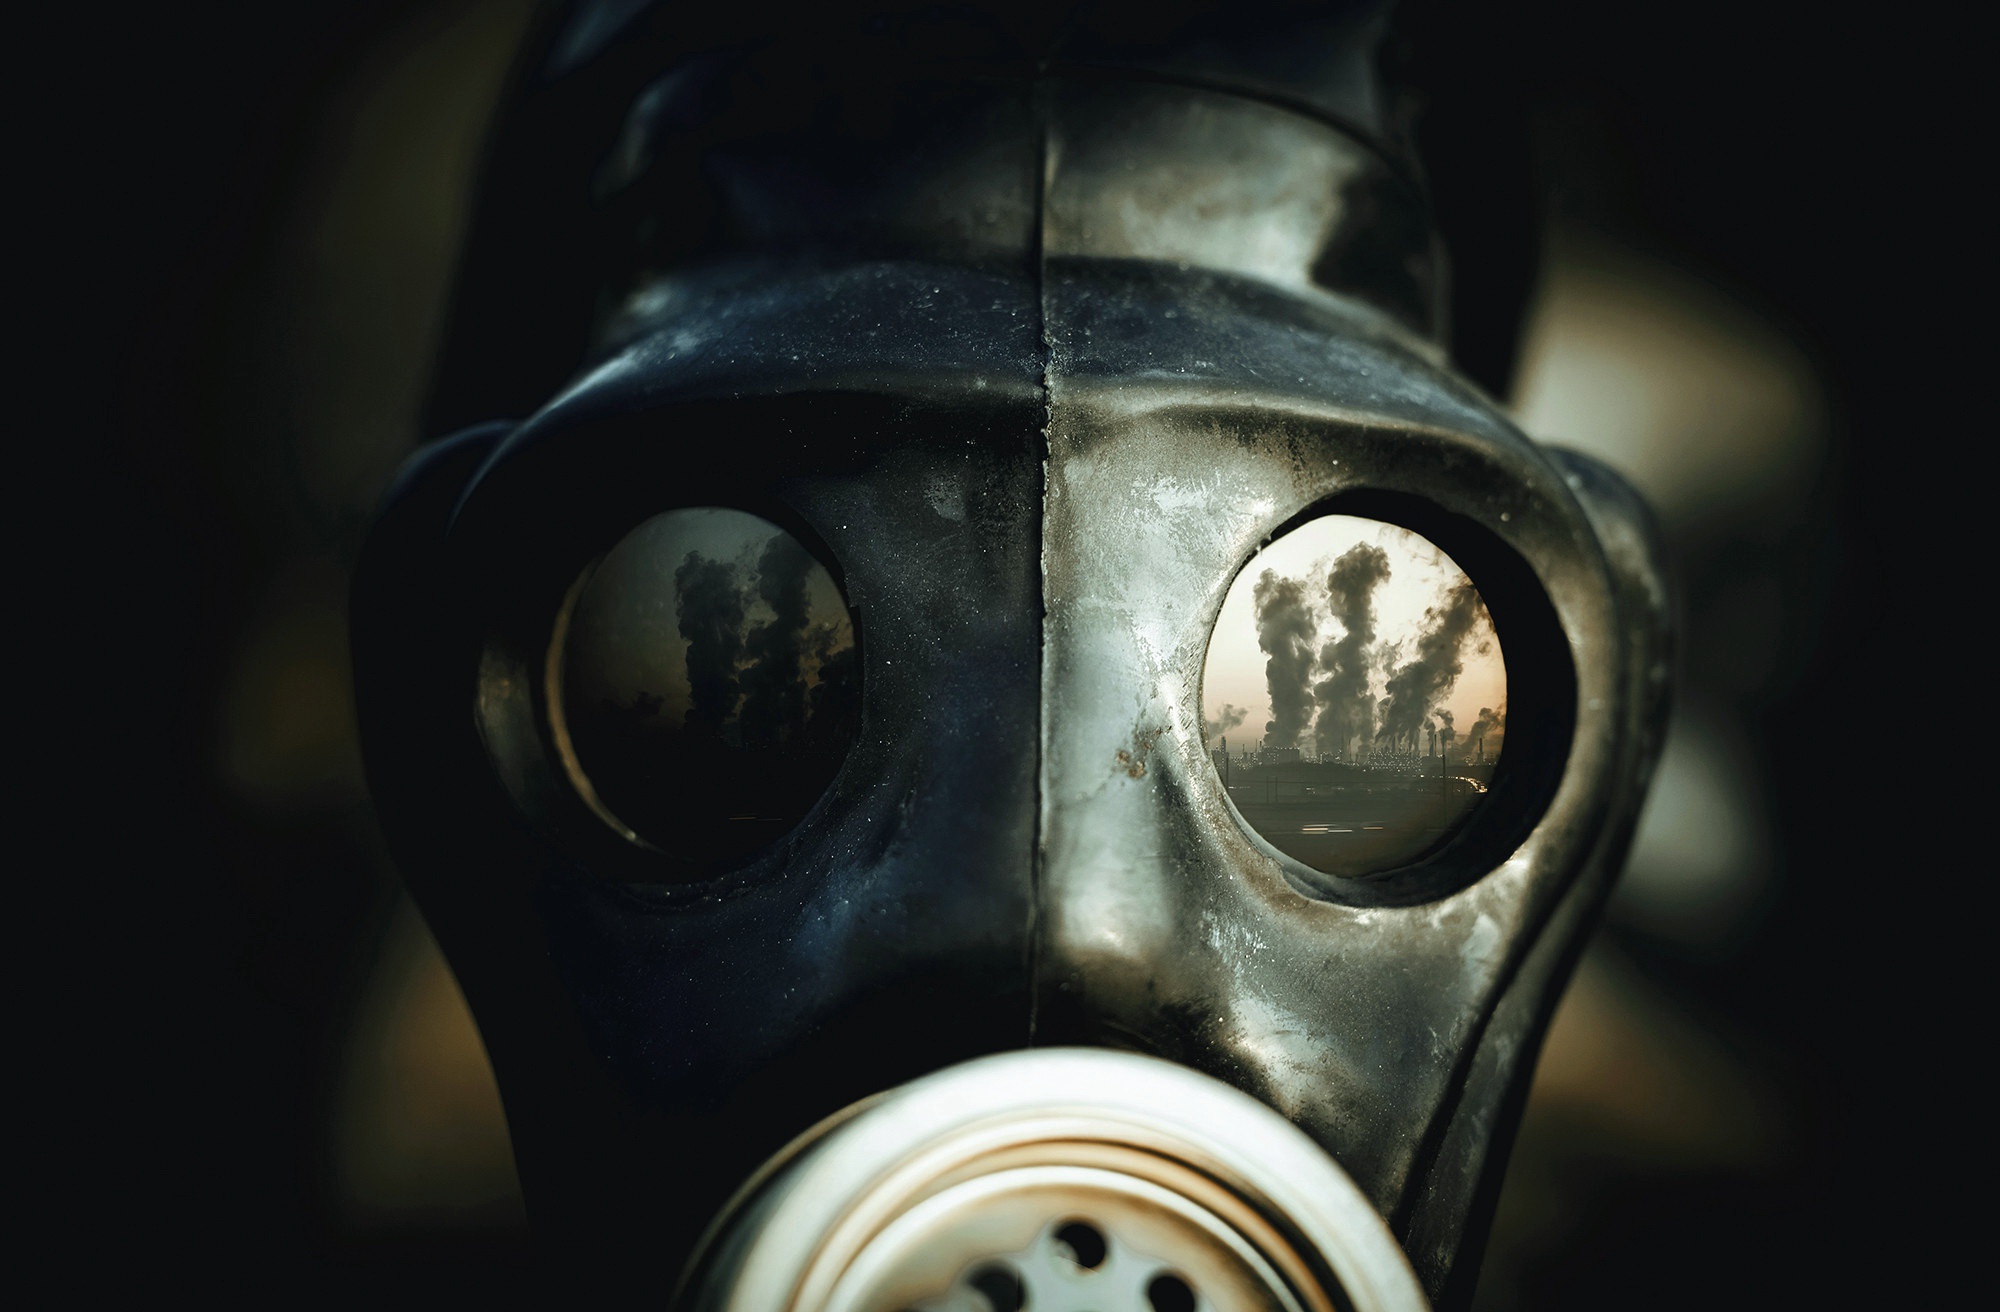 Apocalyptic Mask Reflection Gas Masks Factories Smoke Smog 2000x1312